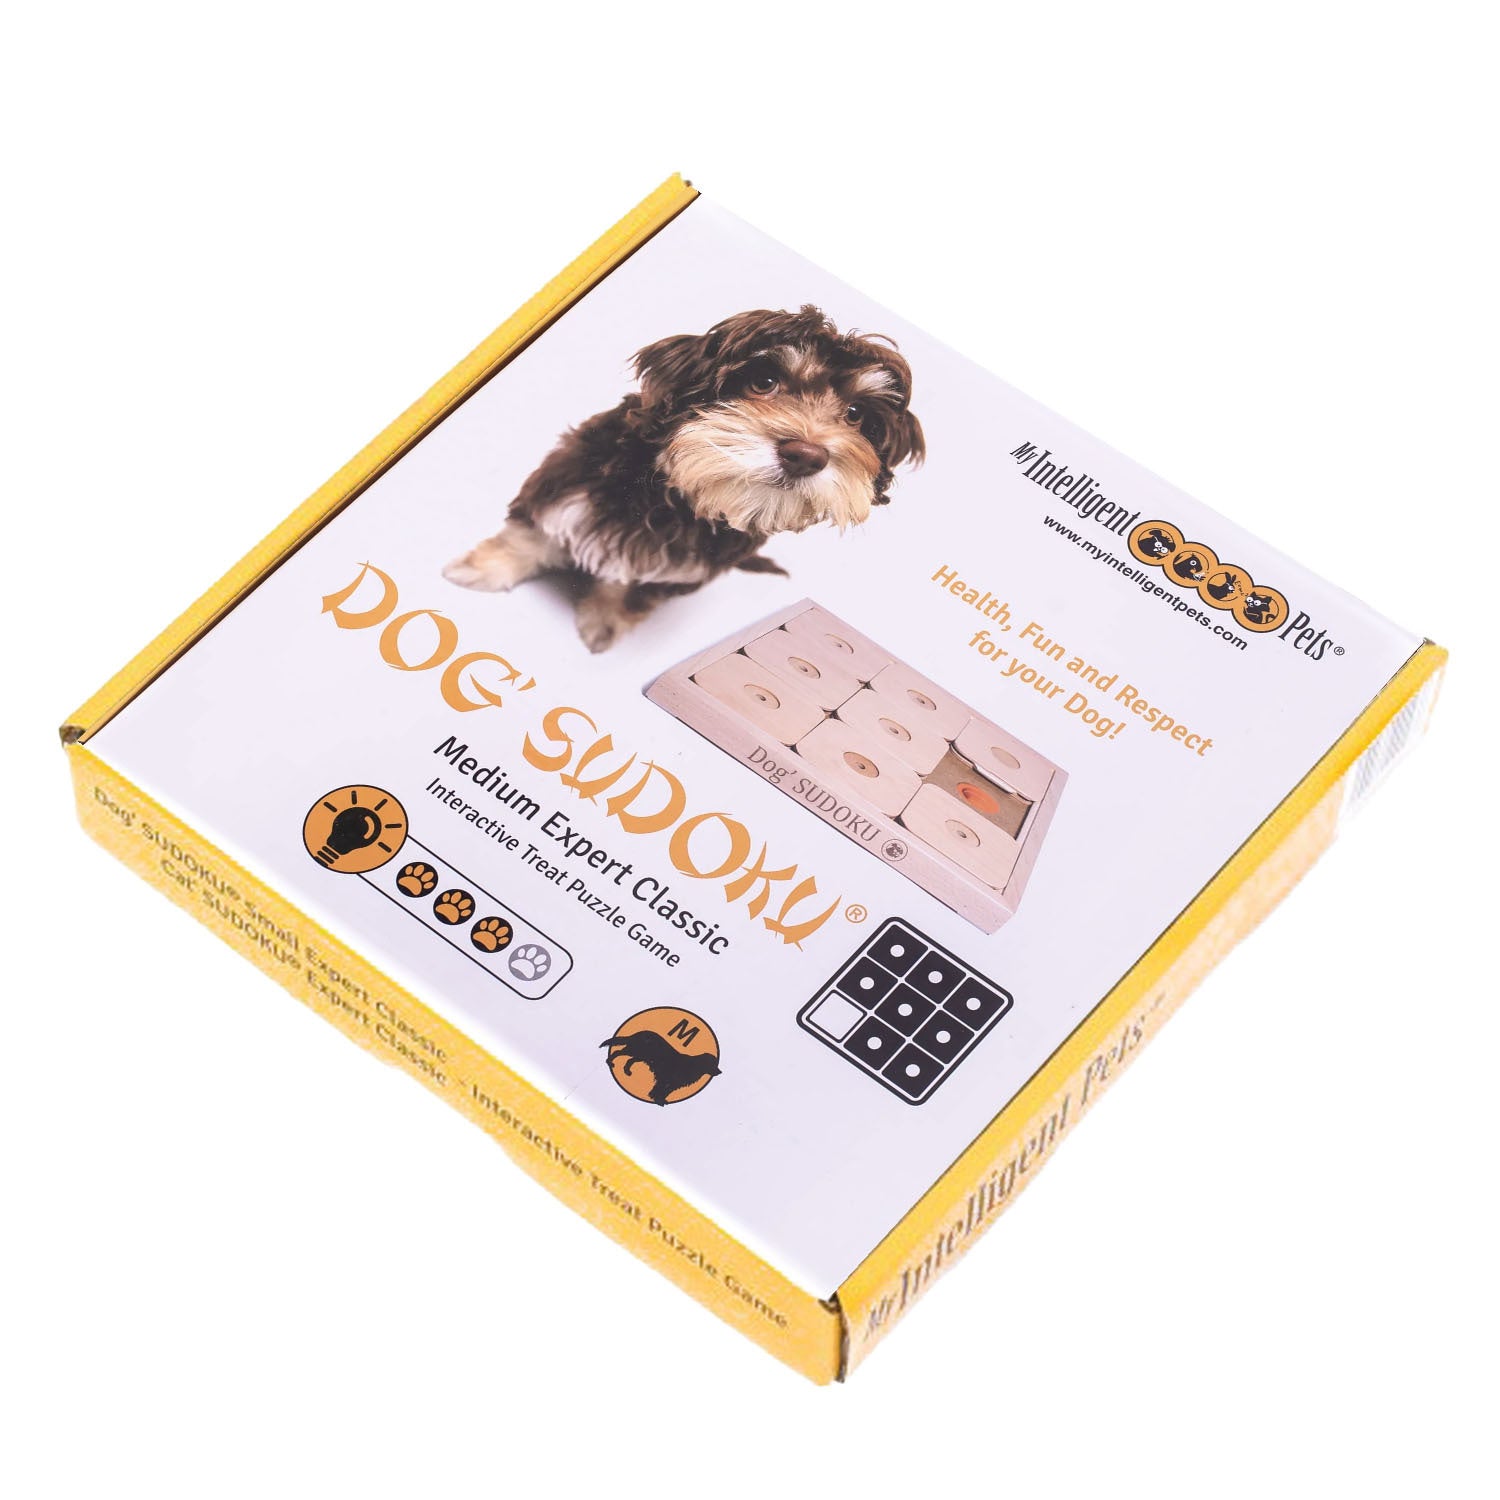 My Intelligent Pets | Dog' Sudoku Medium Expert Classic-PetsFinest